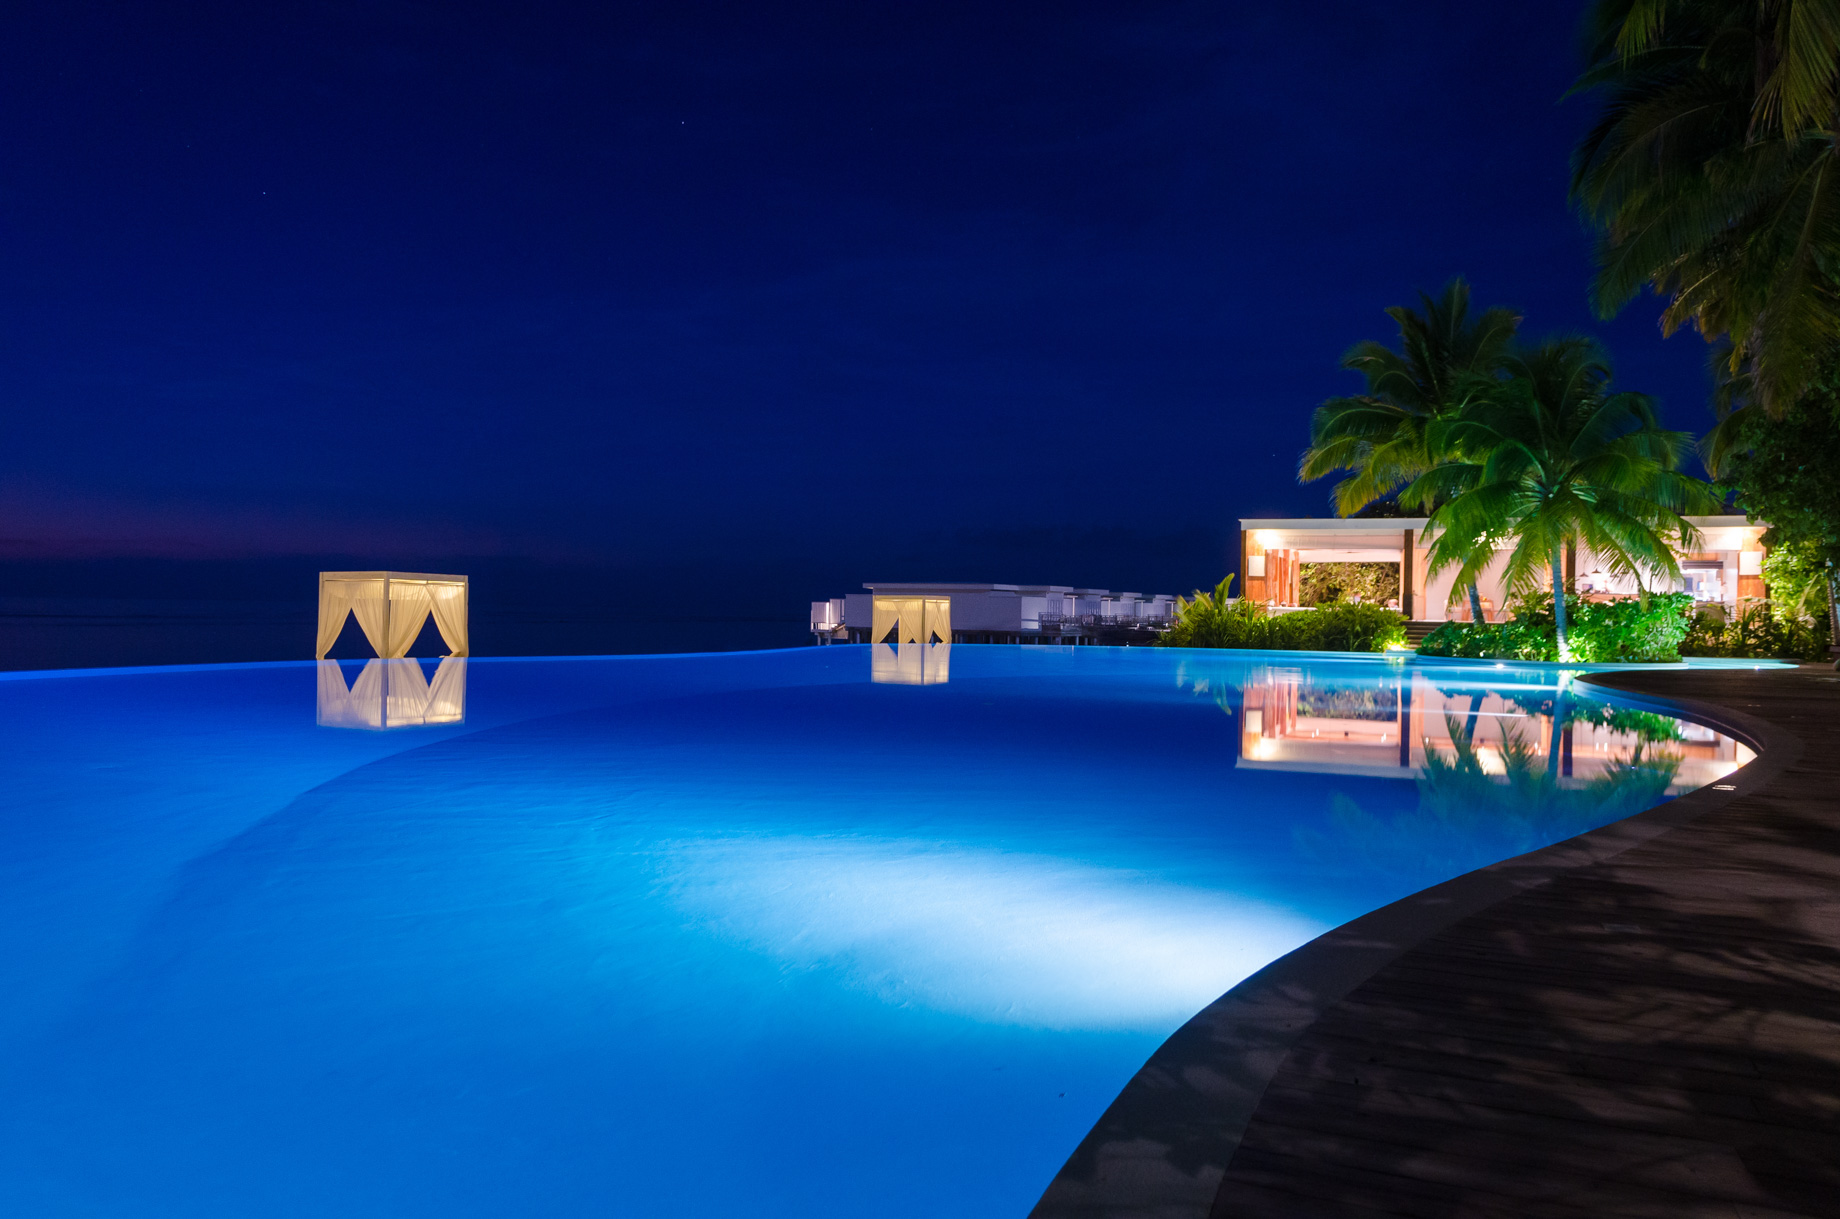 Amilla Fushi Resort and Residences – Baa Atoll, Maldives – Beachfront Infinity Pool Night